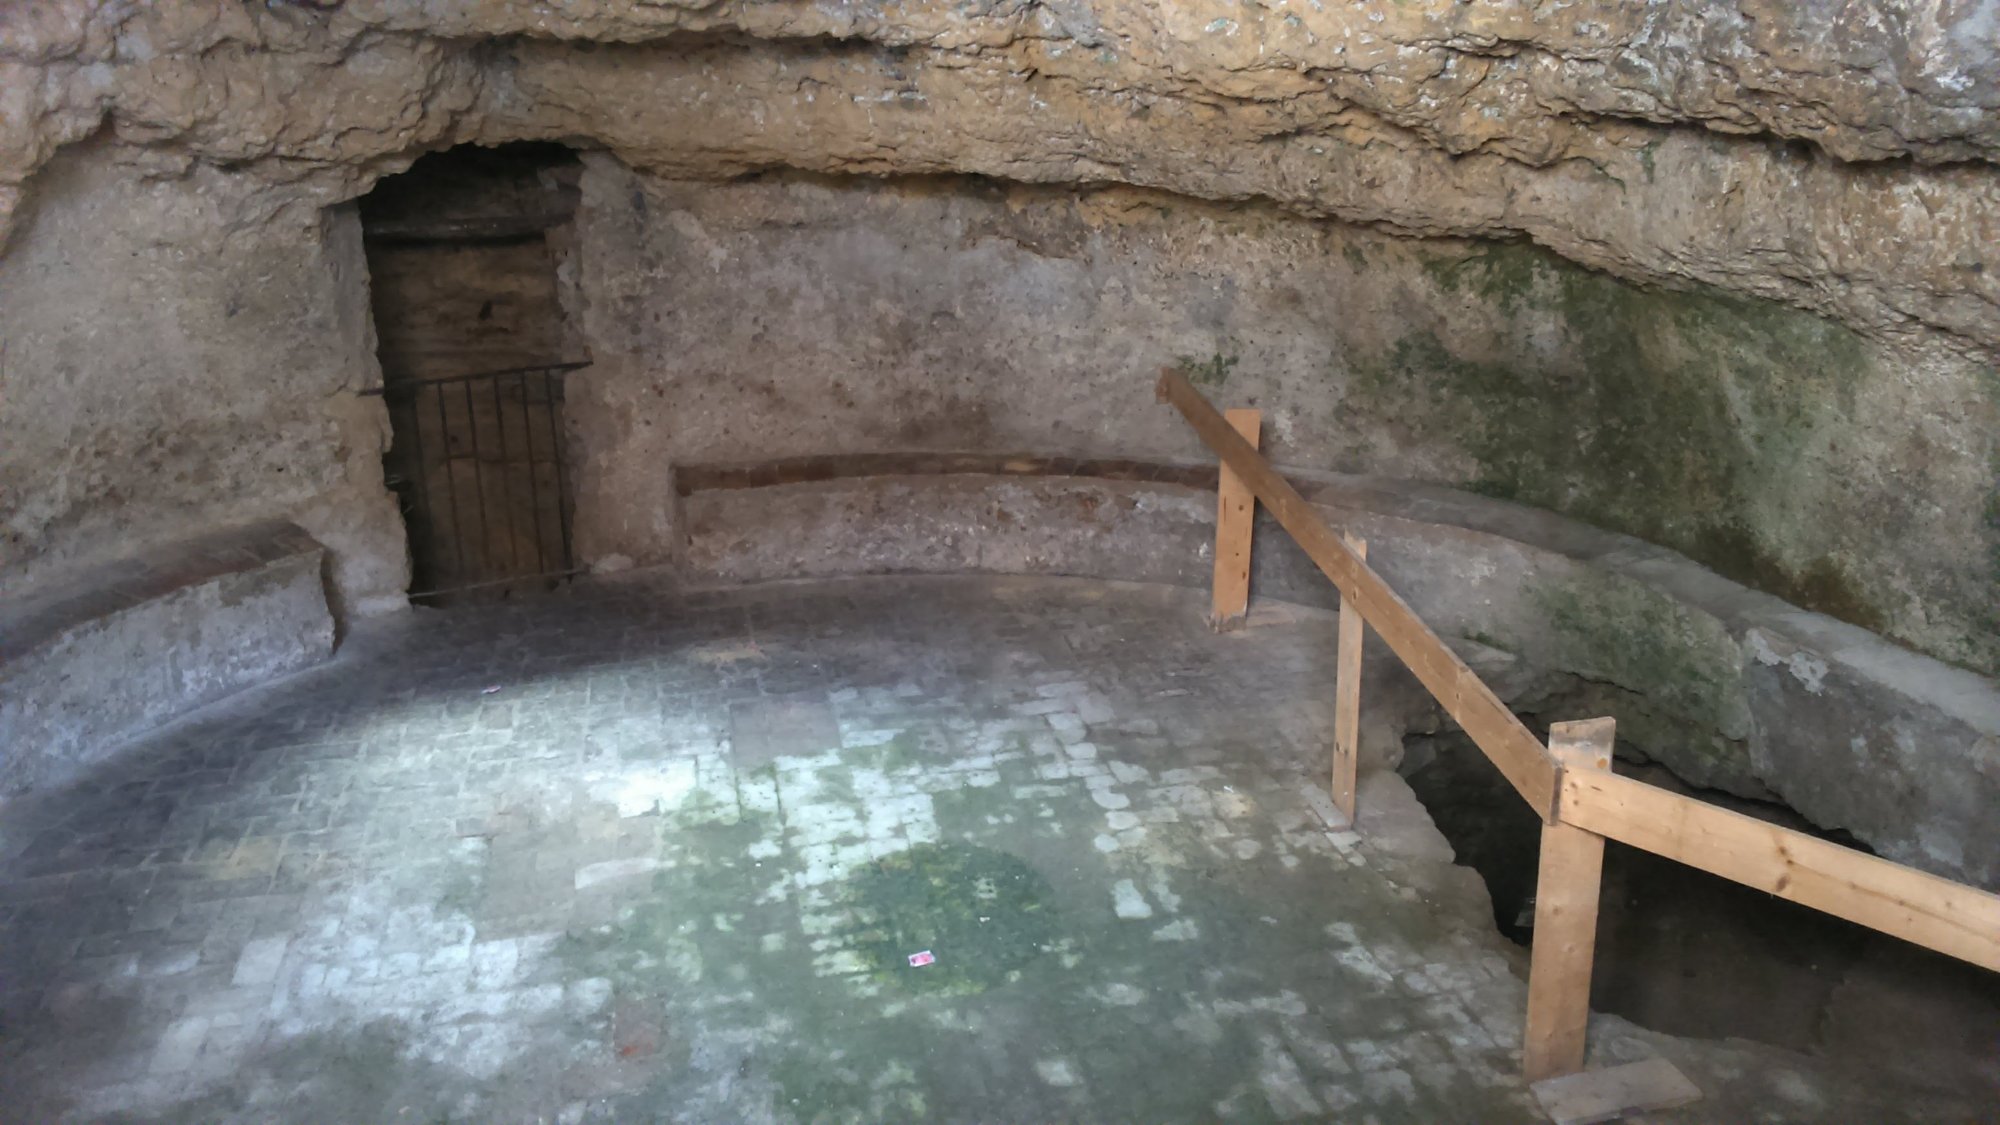 Grotta dei Beati Paoli